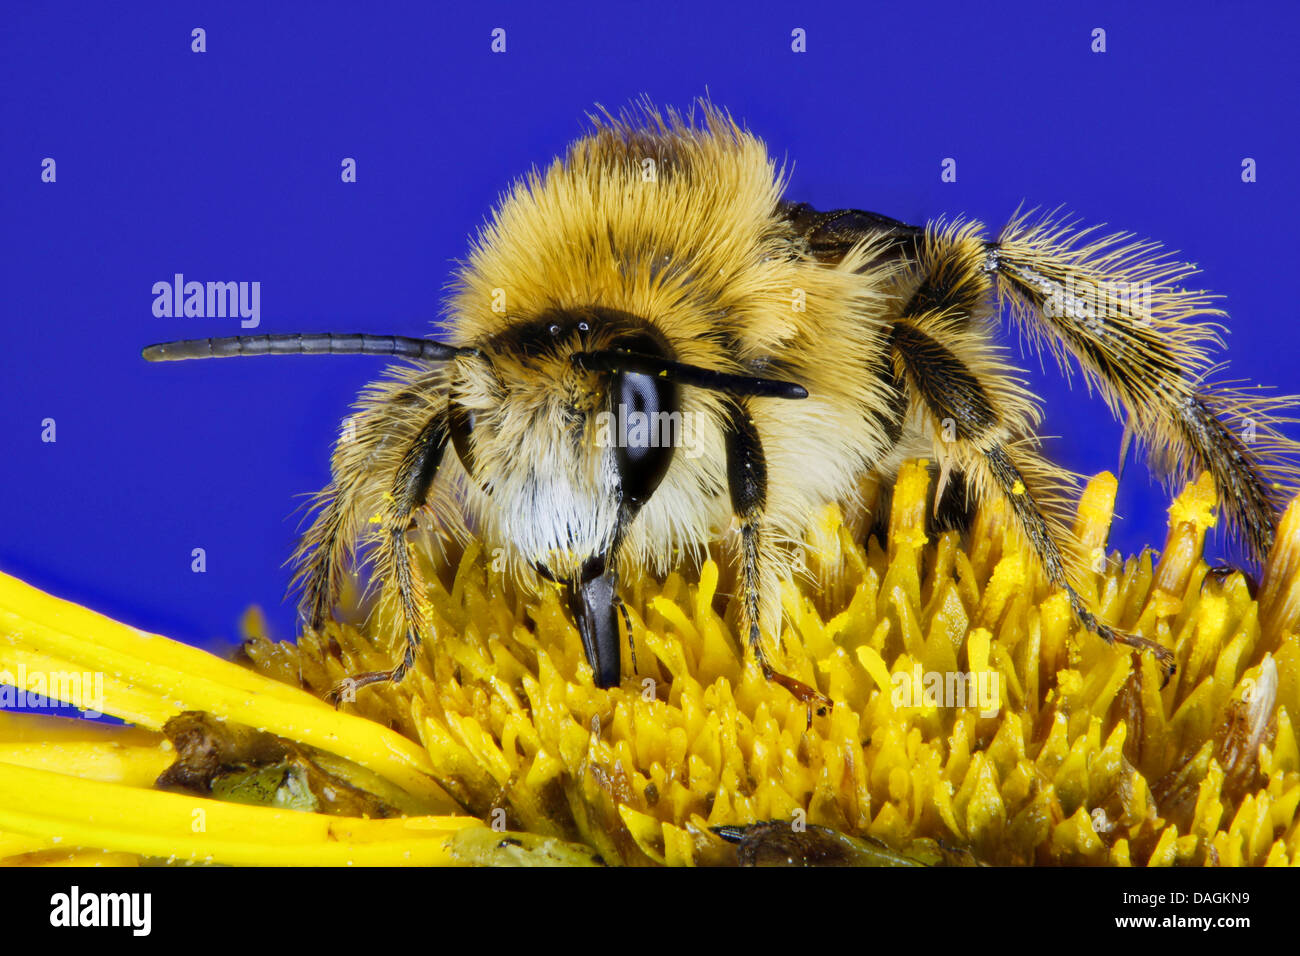 Hairy-legged bees (Dasypoda altercator), visiting a flower, Germany Stock Photo